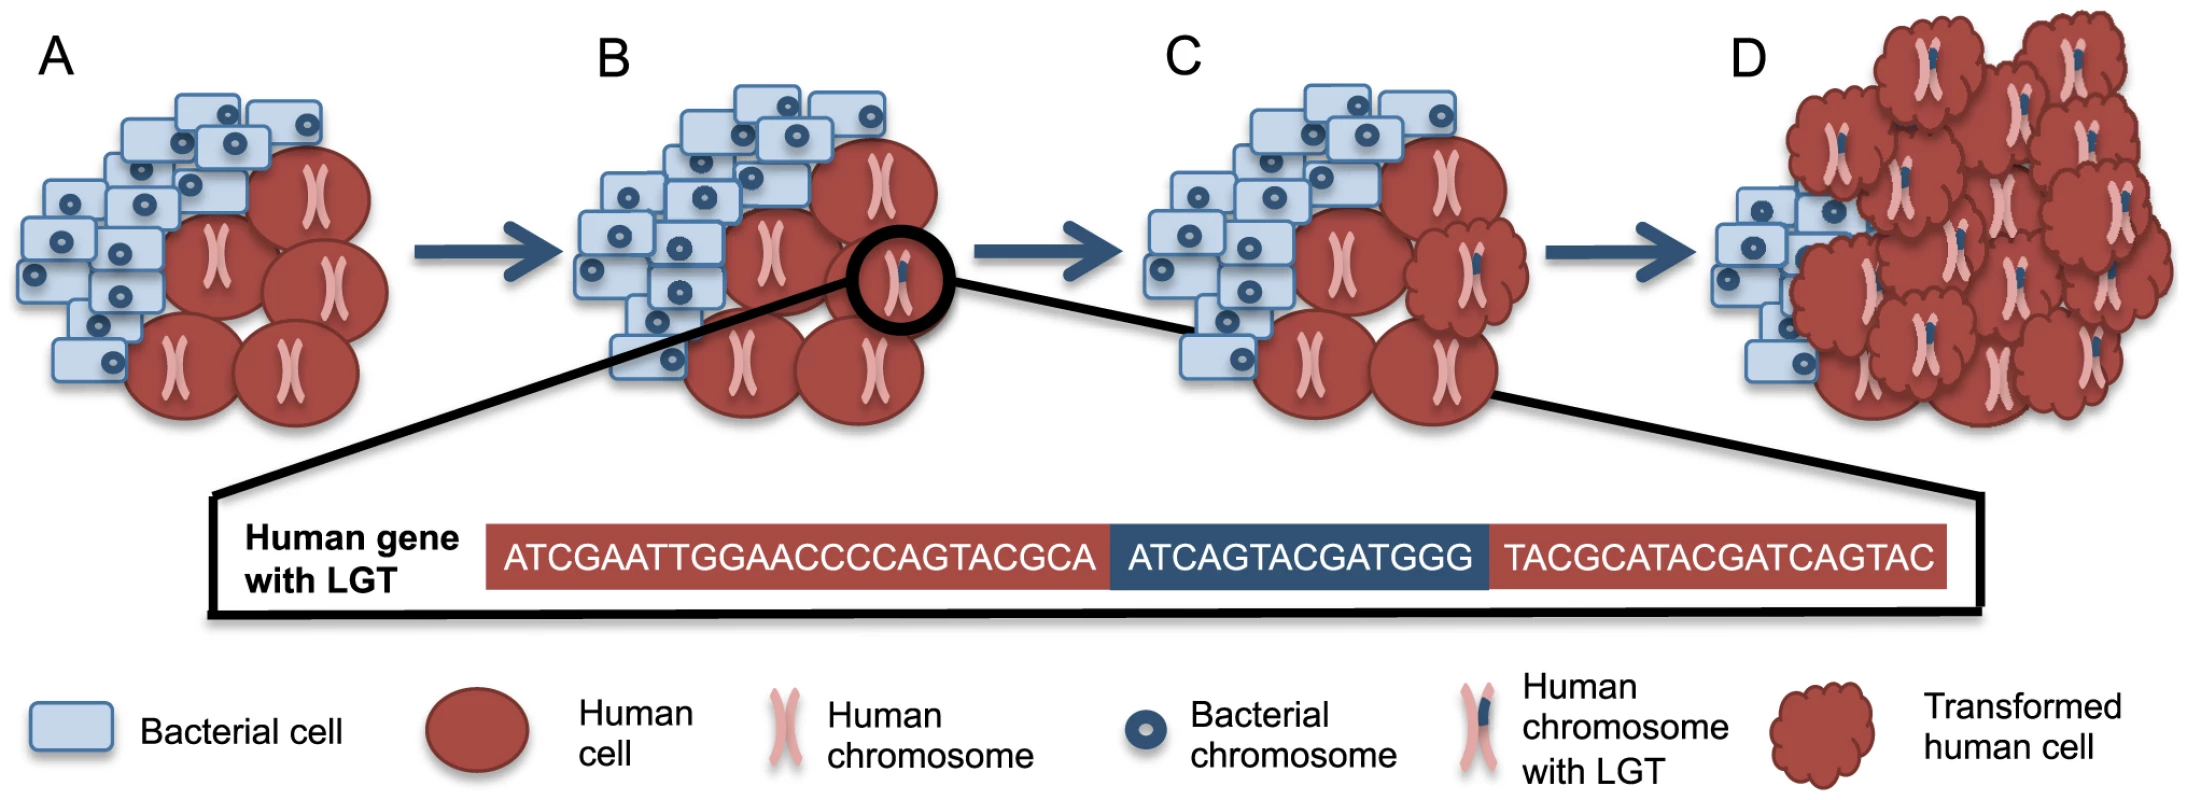 A scenario for bacteria-human LGT and carcinogenesis.